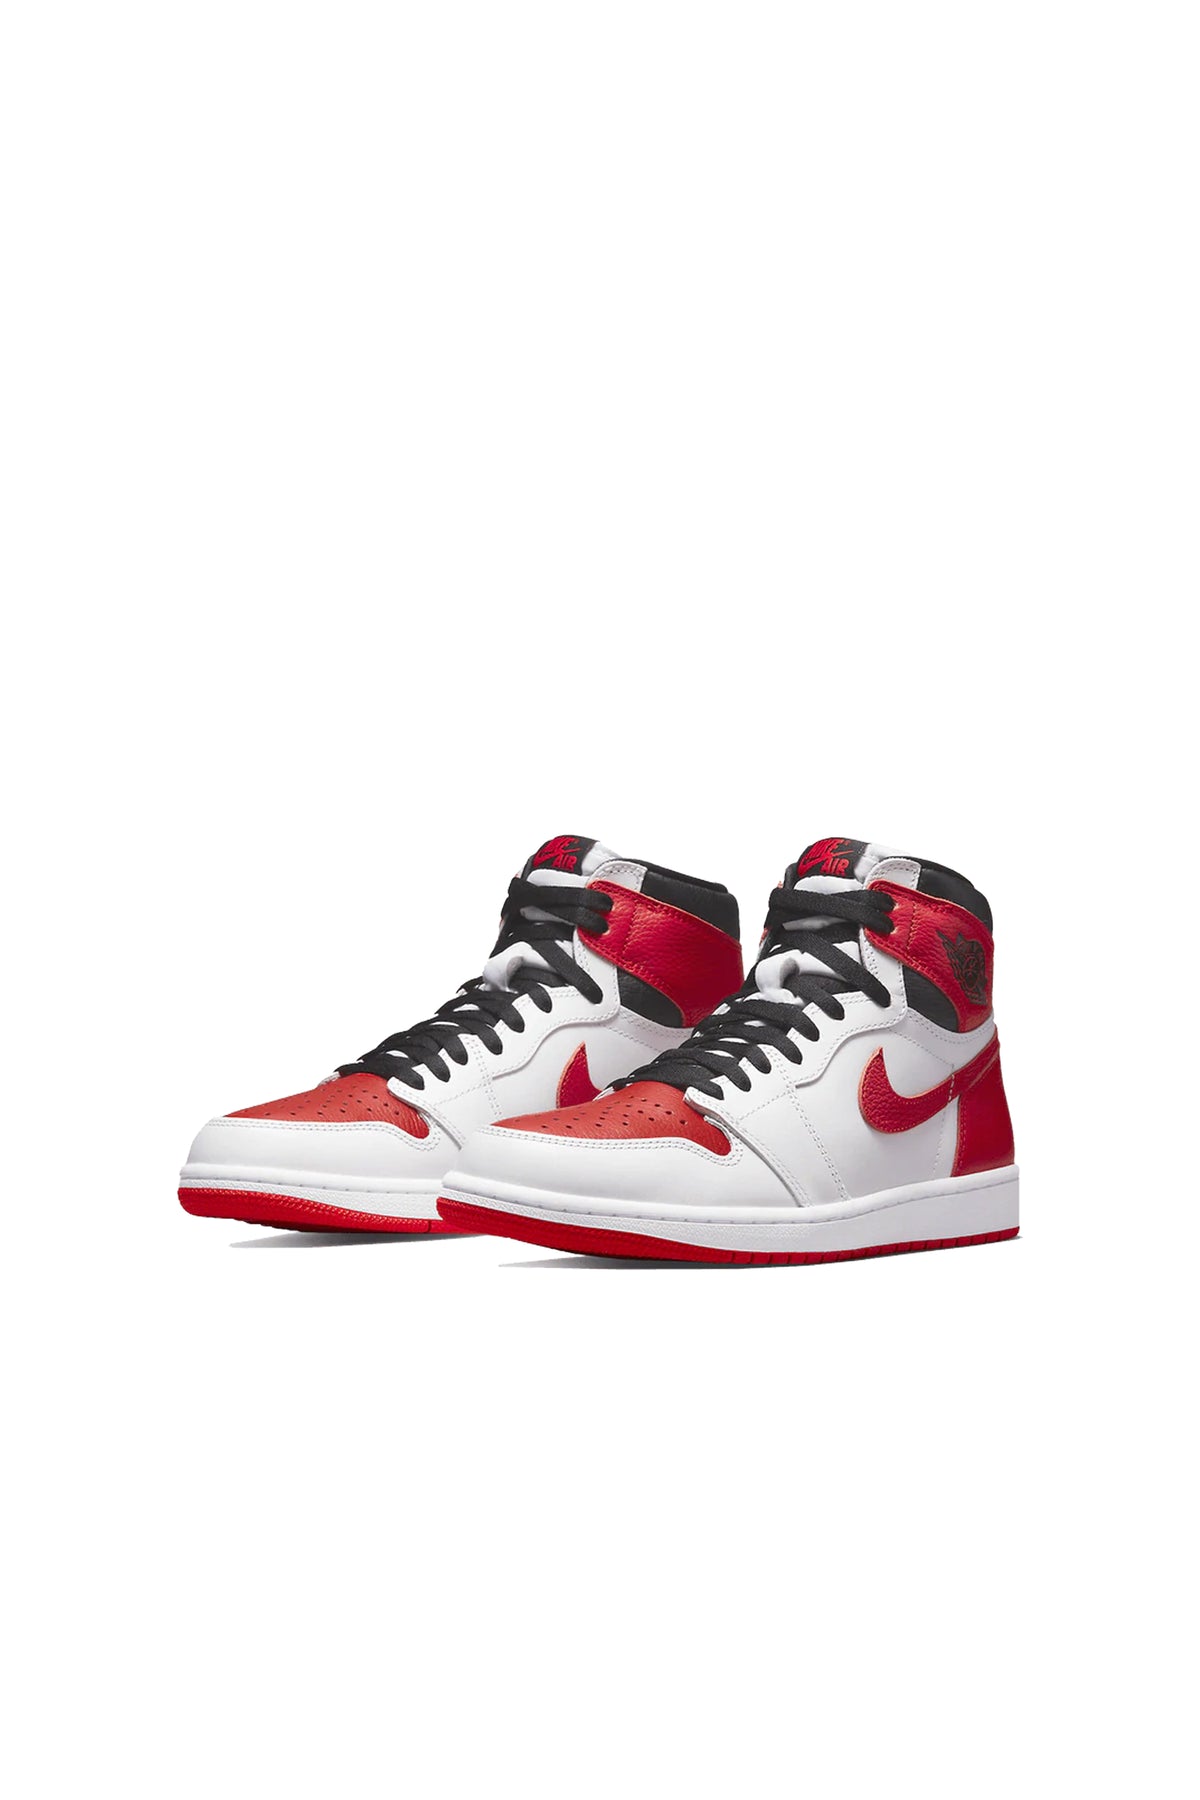 Nike Air Jordan 1 Retro High OG “Heritage”